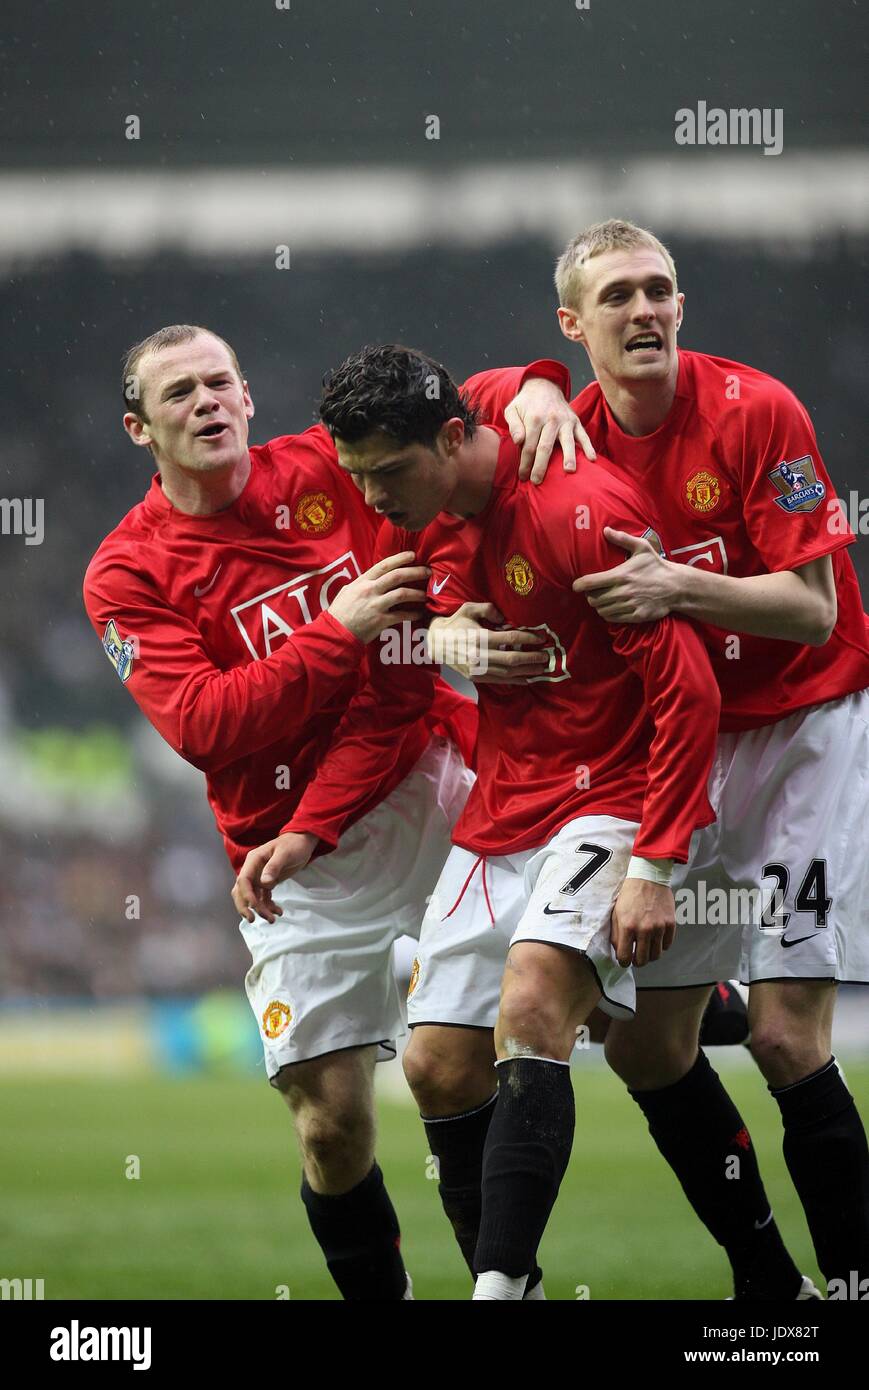 WAYNE ROONEY, Cristiano Ronaldo , Darren Fletcher, DERBY COUNTY V MANCHESTER UNITED, DERBY COUNTY V Manchester Utd, 2008 Foto de stock